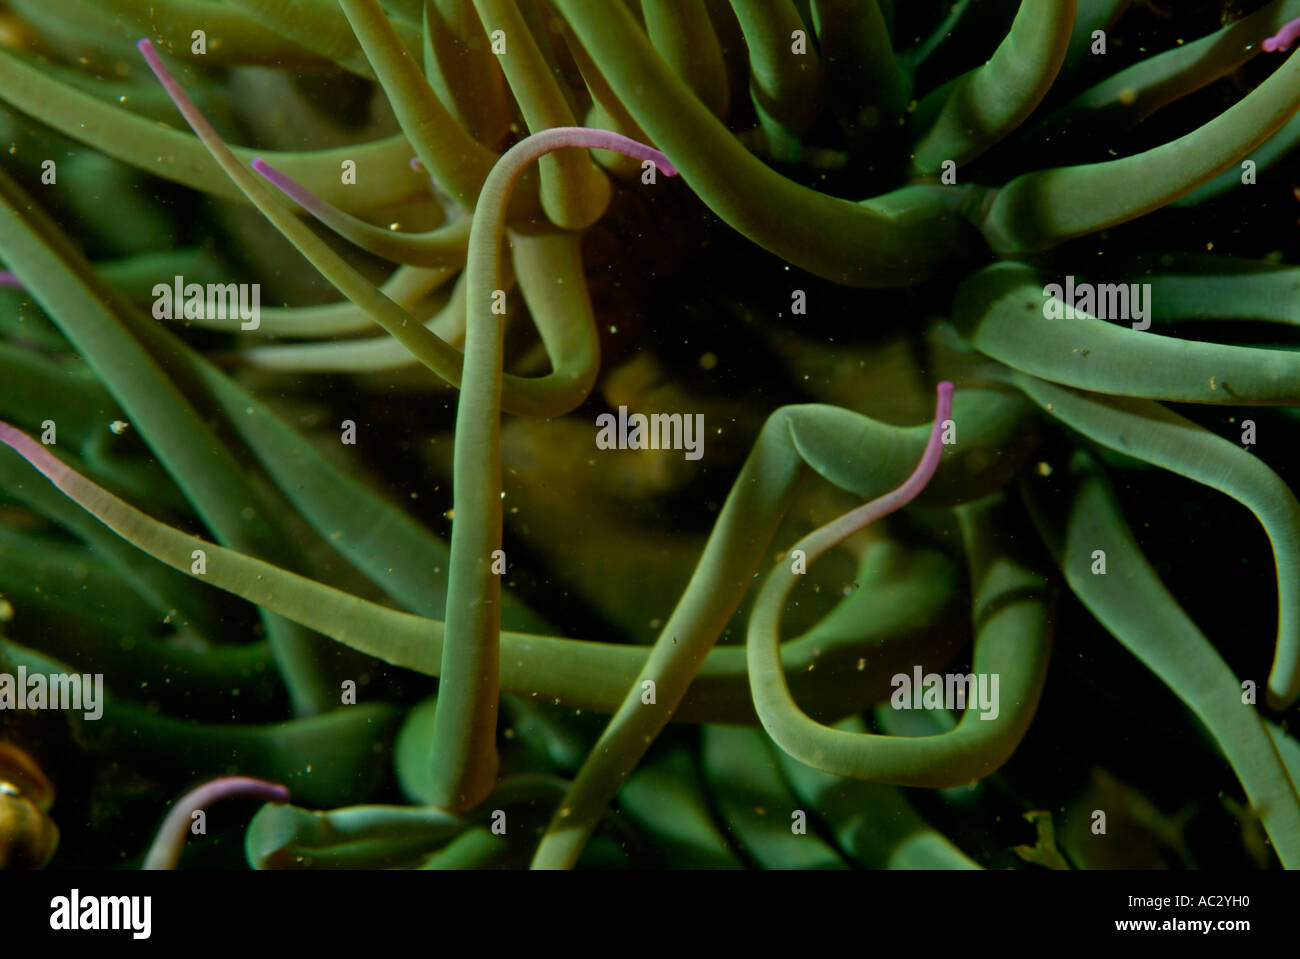 France marseille callelongue creek snake locks anemone anemonia viridis sulcata Stock Photo